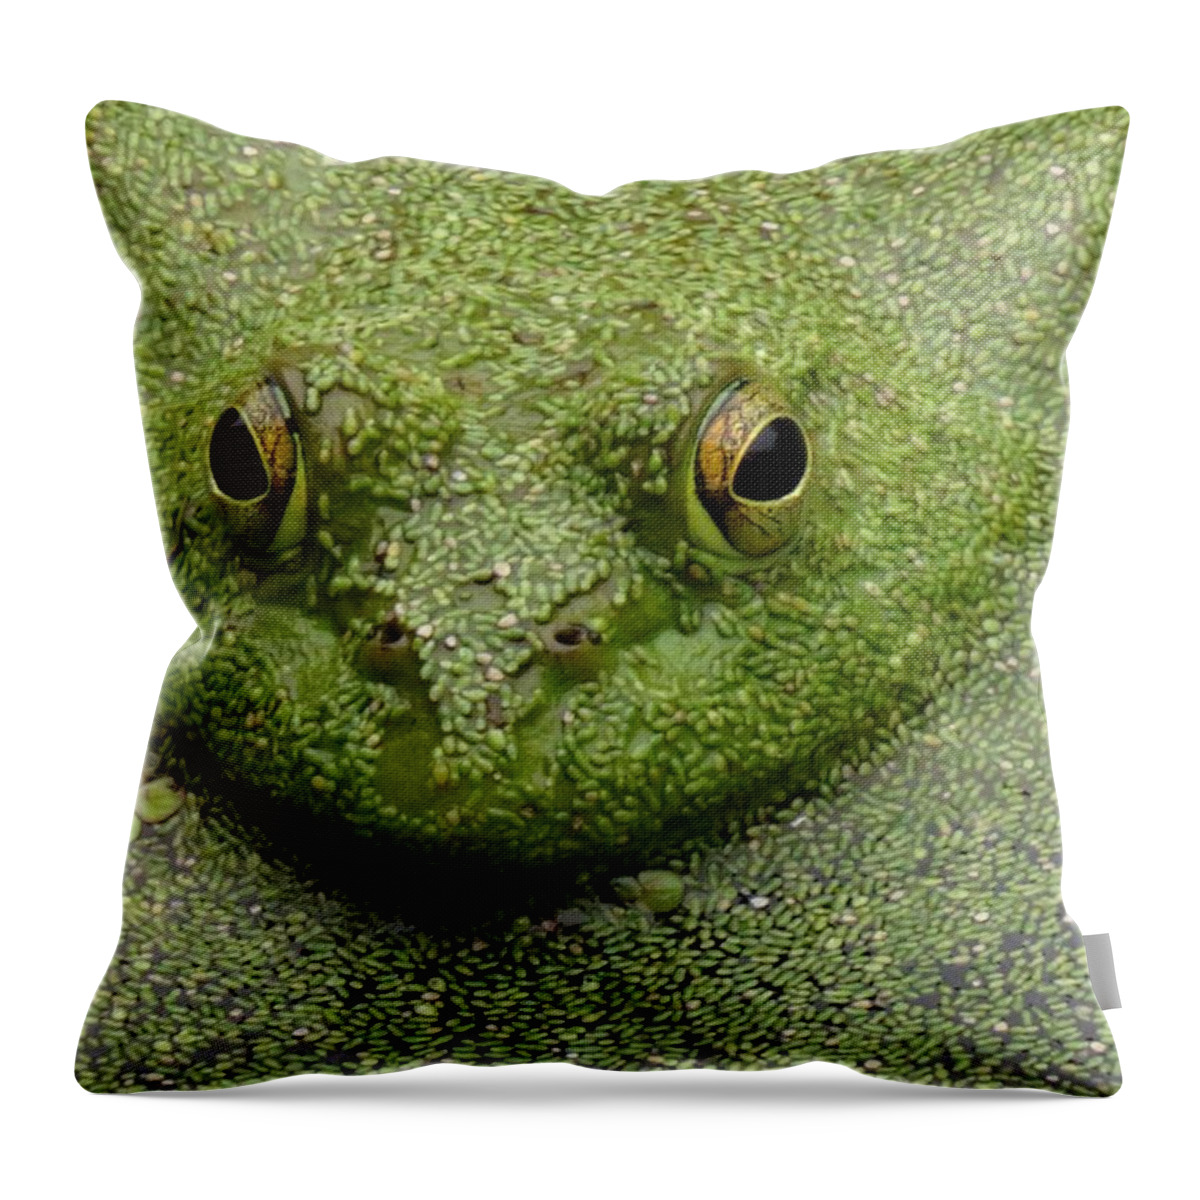 Bullfrog Throw Pillow featuring the digital art Predator by I'ina Van Lawick